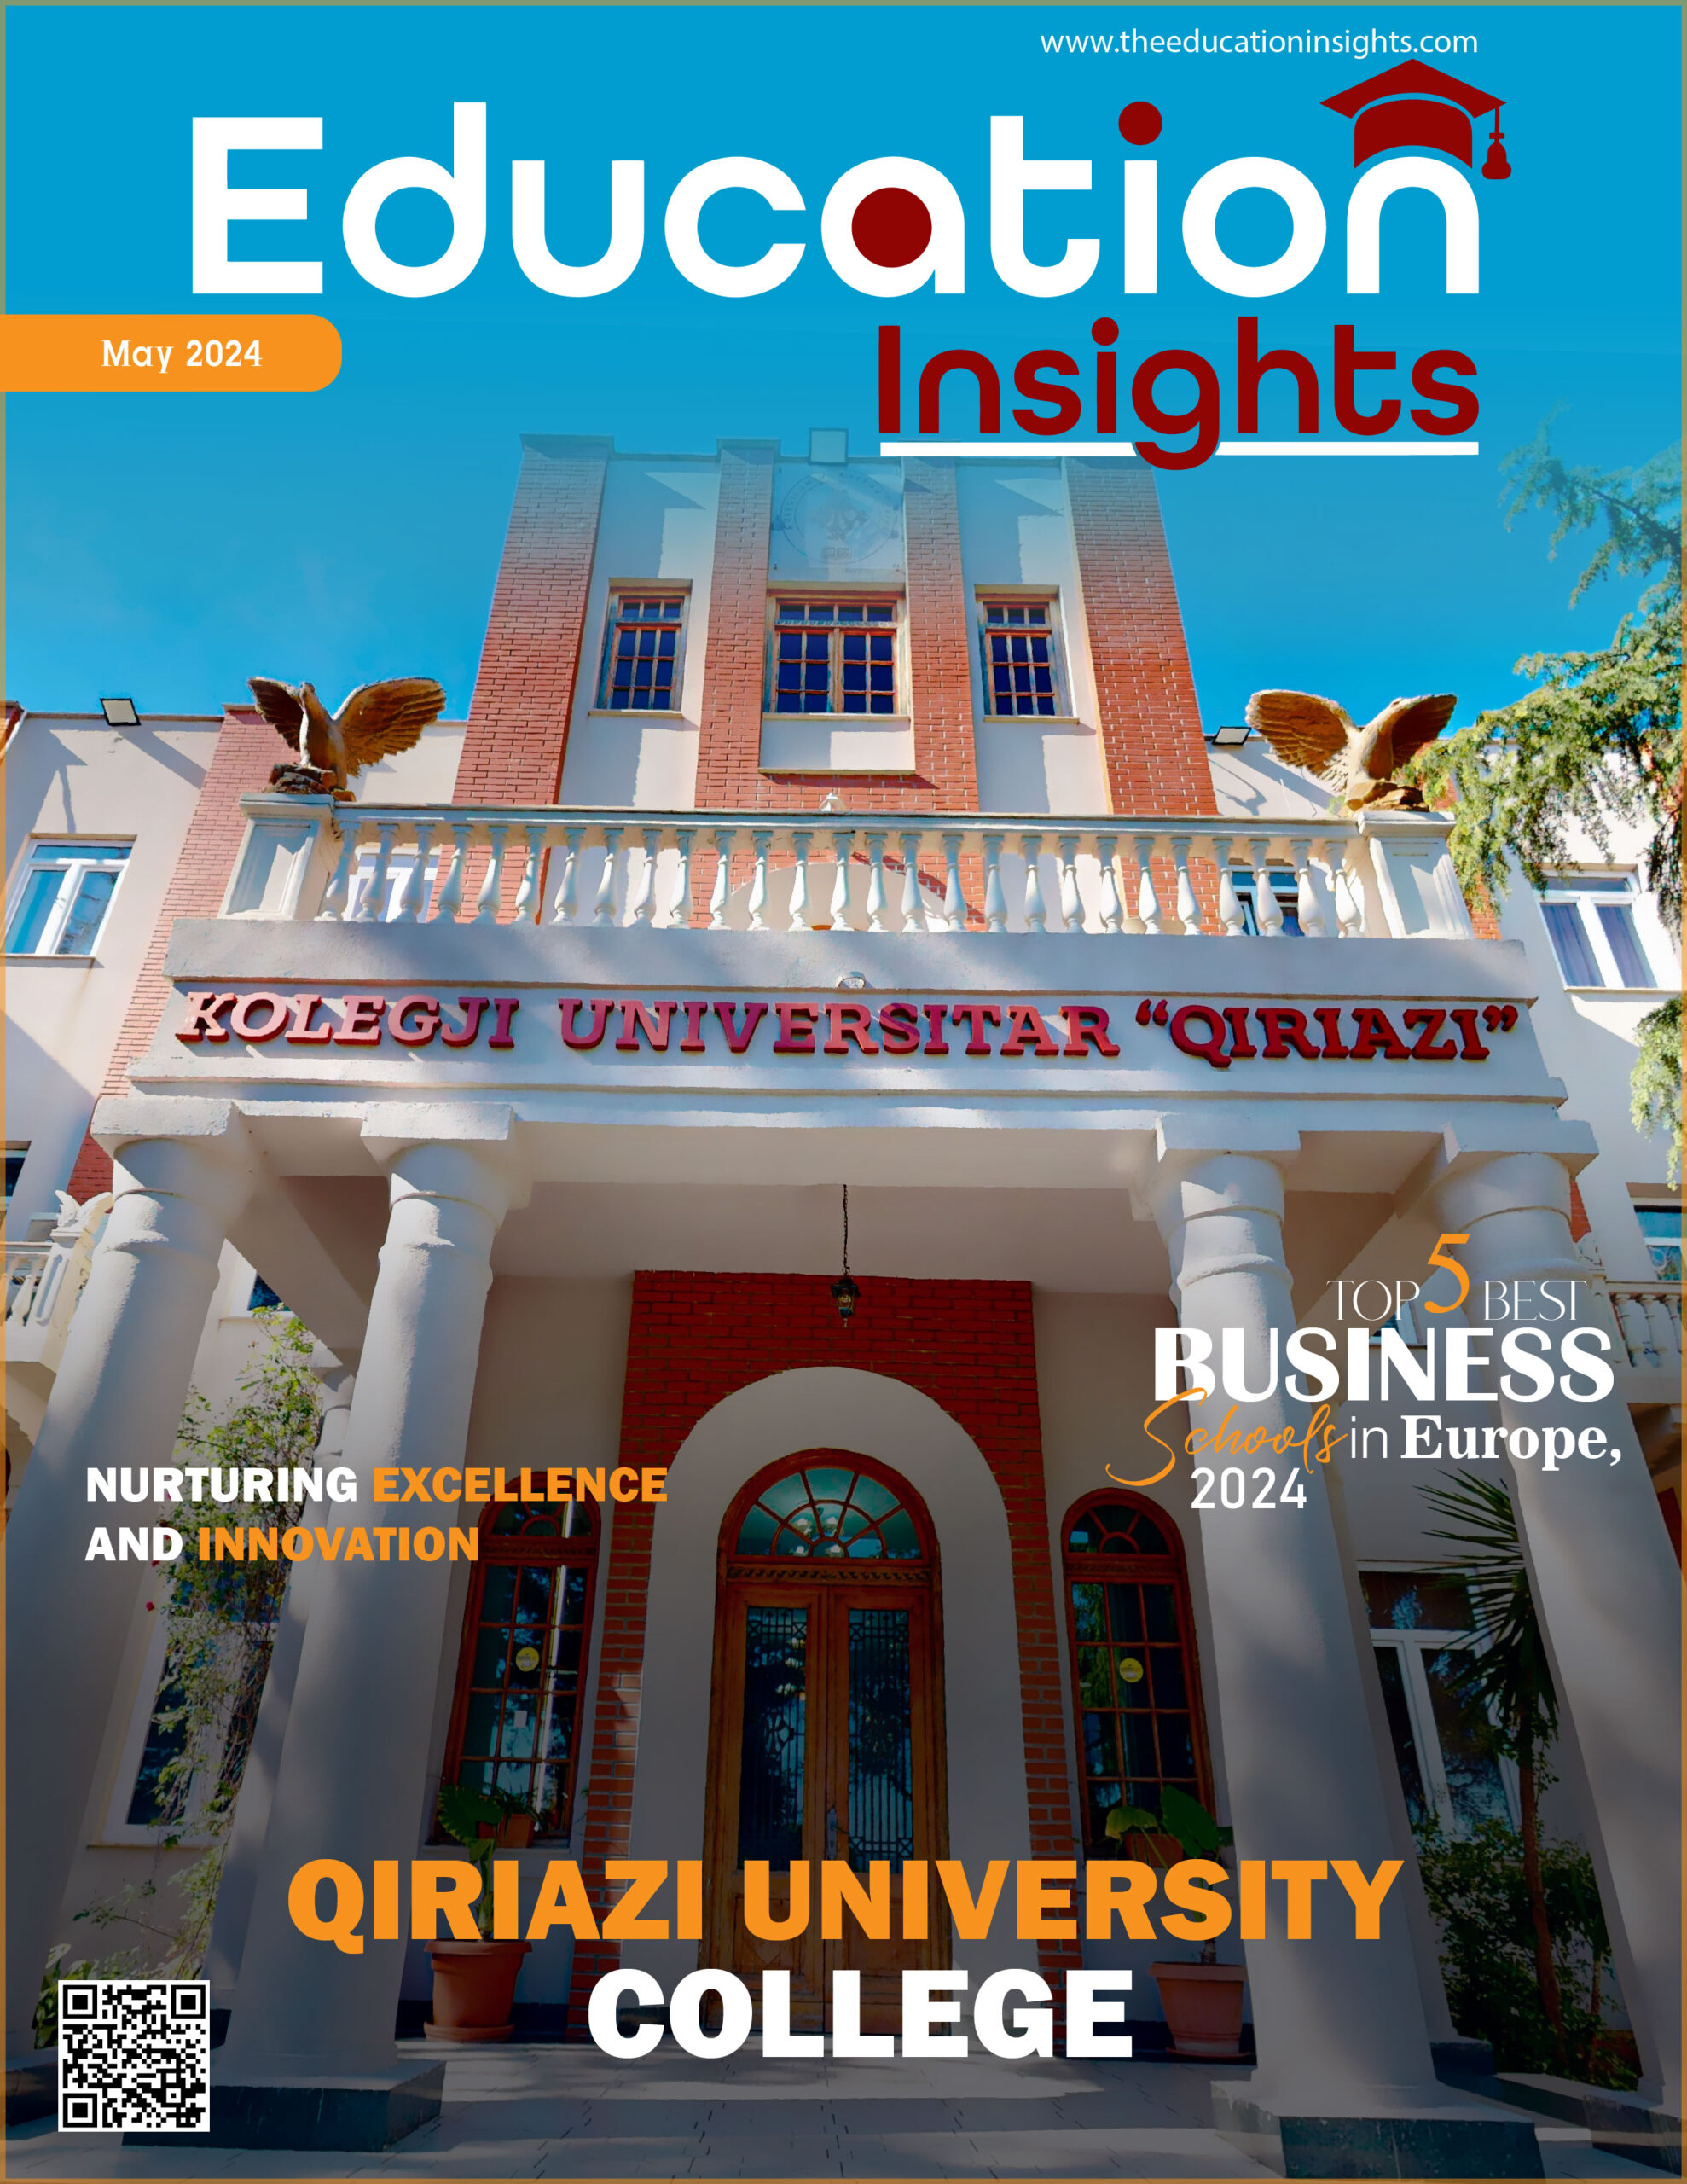 Gjoke Uldedaj | President | Qiriazi University College | The Education Insight